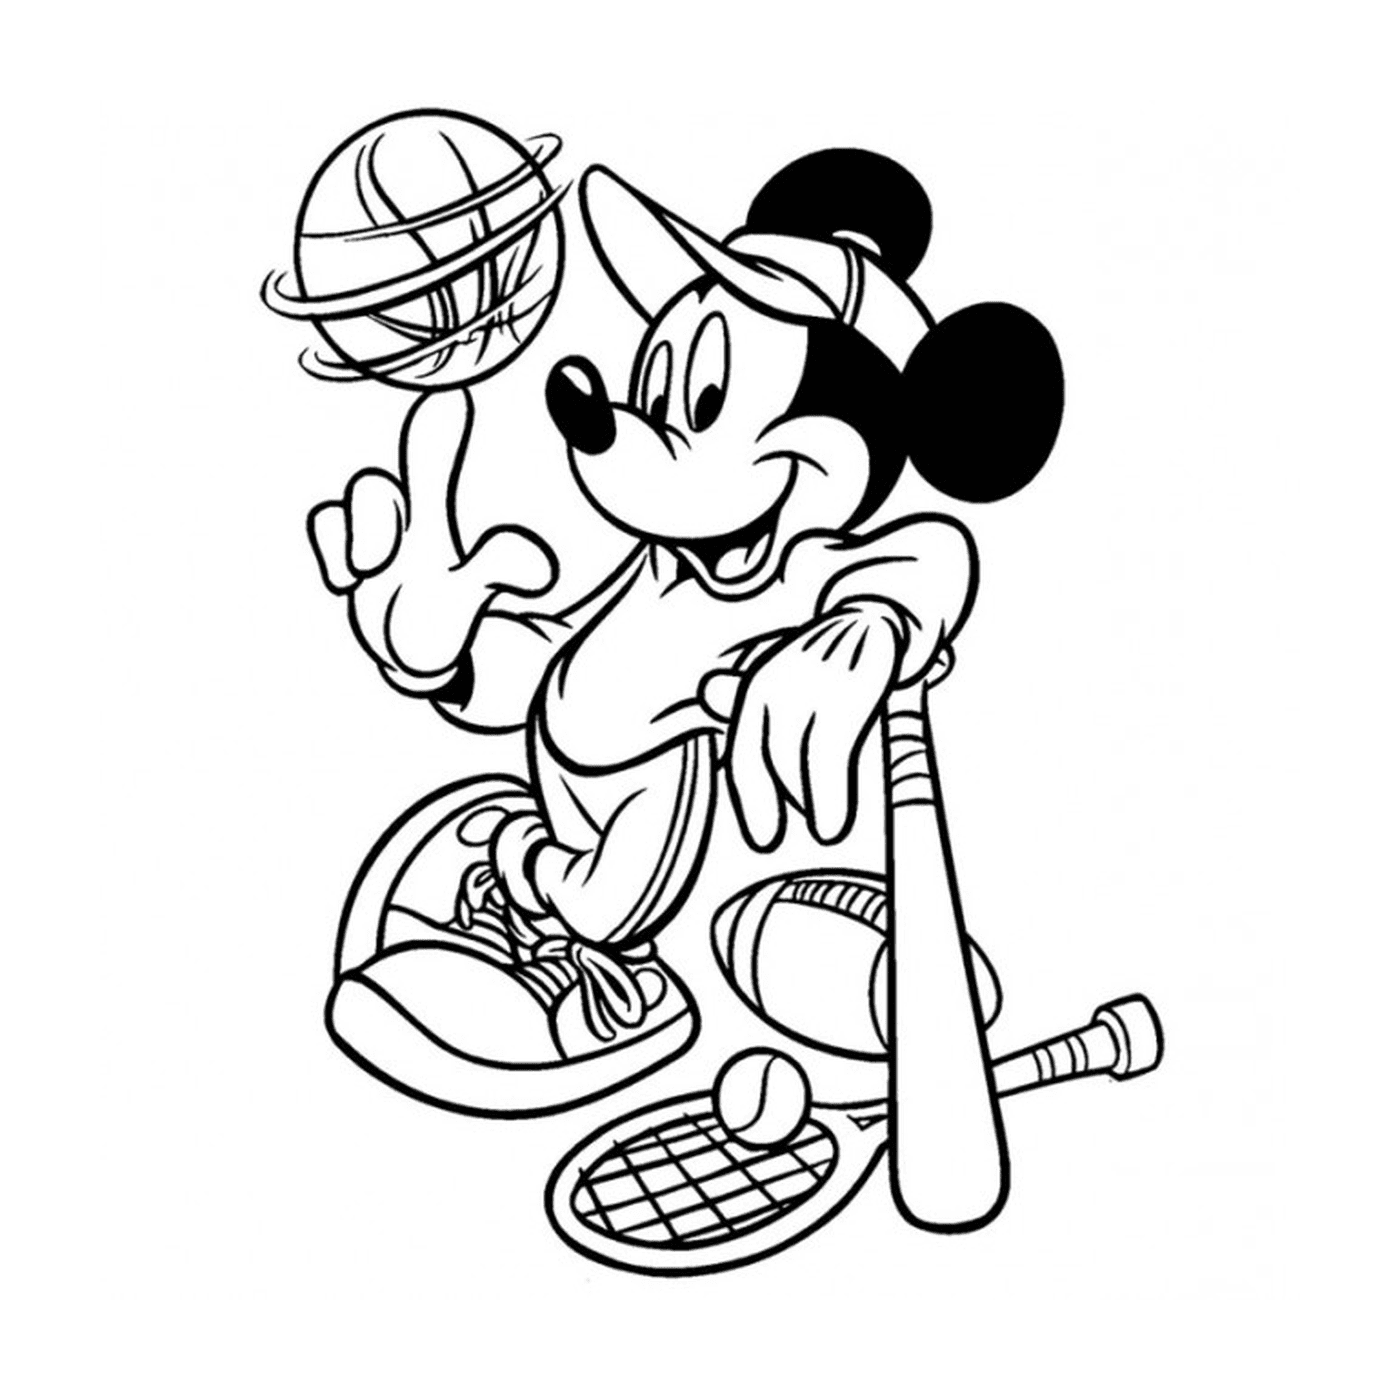   Sport, Disney, Mickey Mouse tenant une batte de baseball et un ballon 